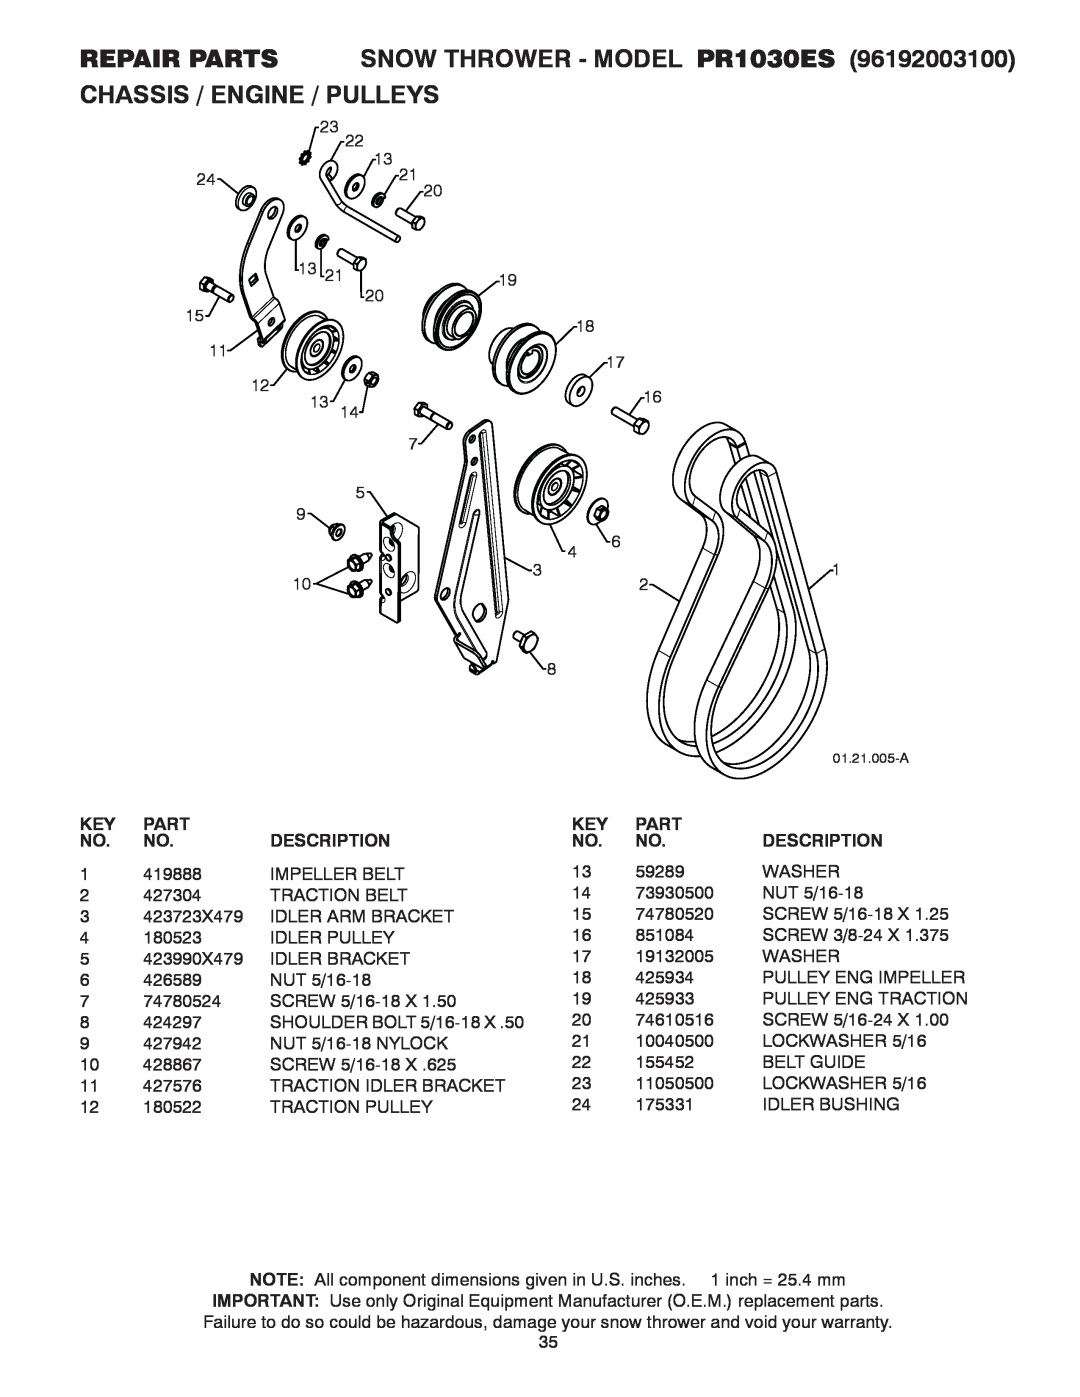 Poulan 96192003100 owner manual REPAIR PARTS SNOW THROWER - MODEL PR1030ES CHASSIS / ENGINE / PULLEYS, Part, Description 